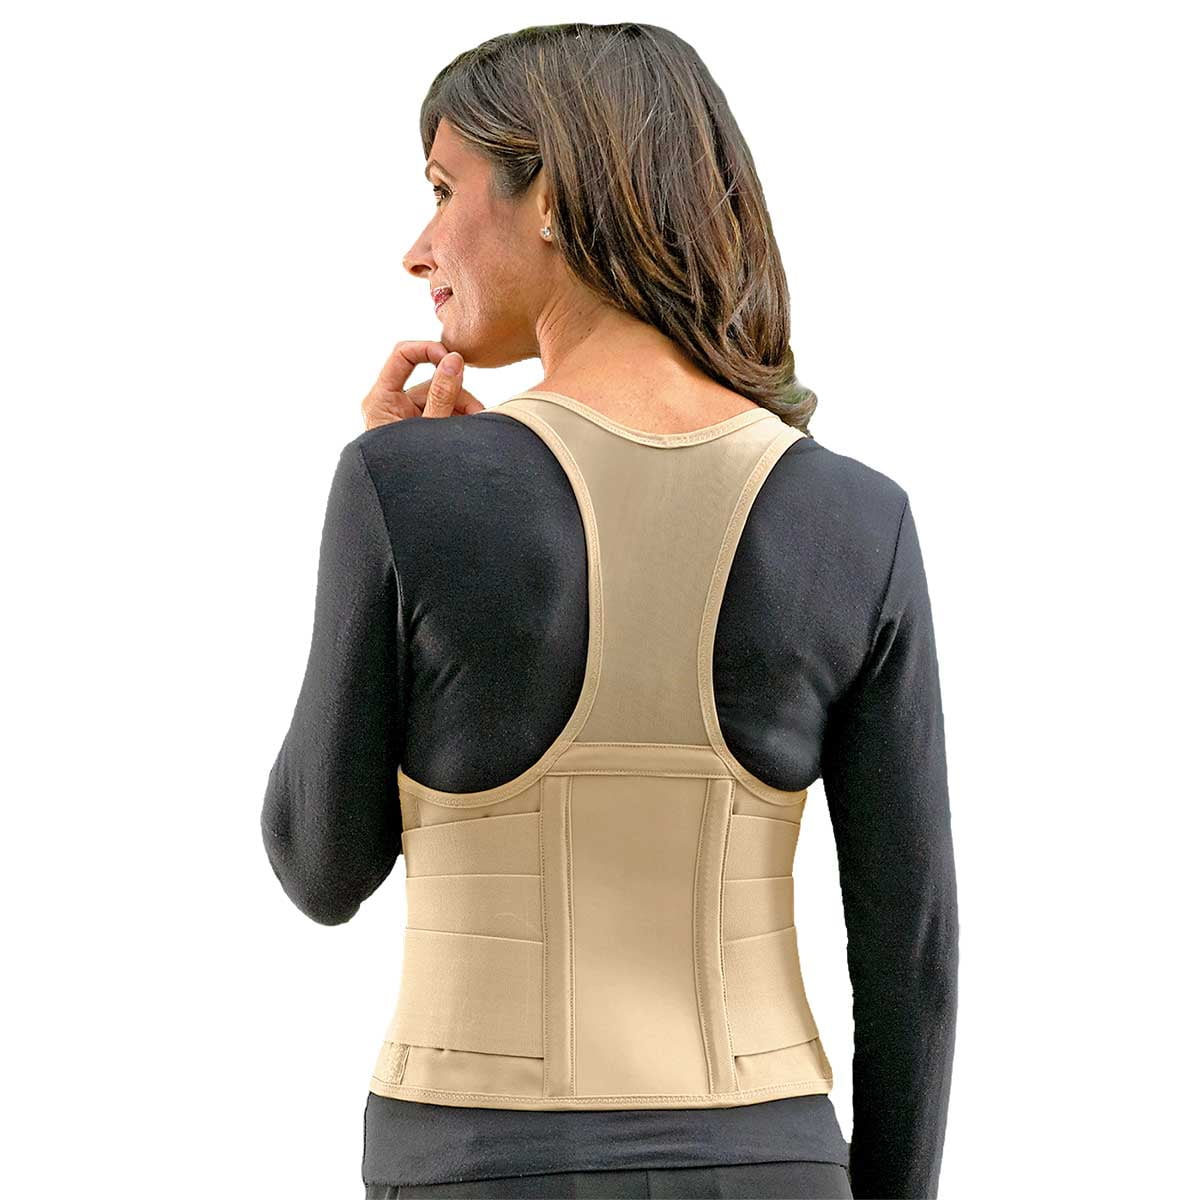 Aptoco Lower Back Brace Posture Corrector for Women and Men Lumbar